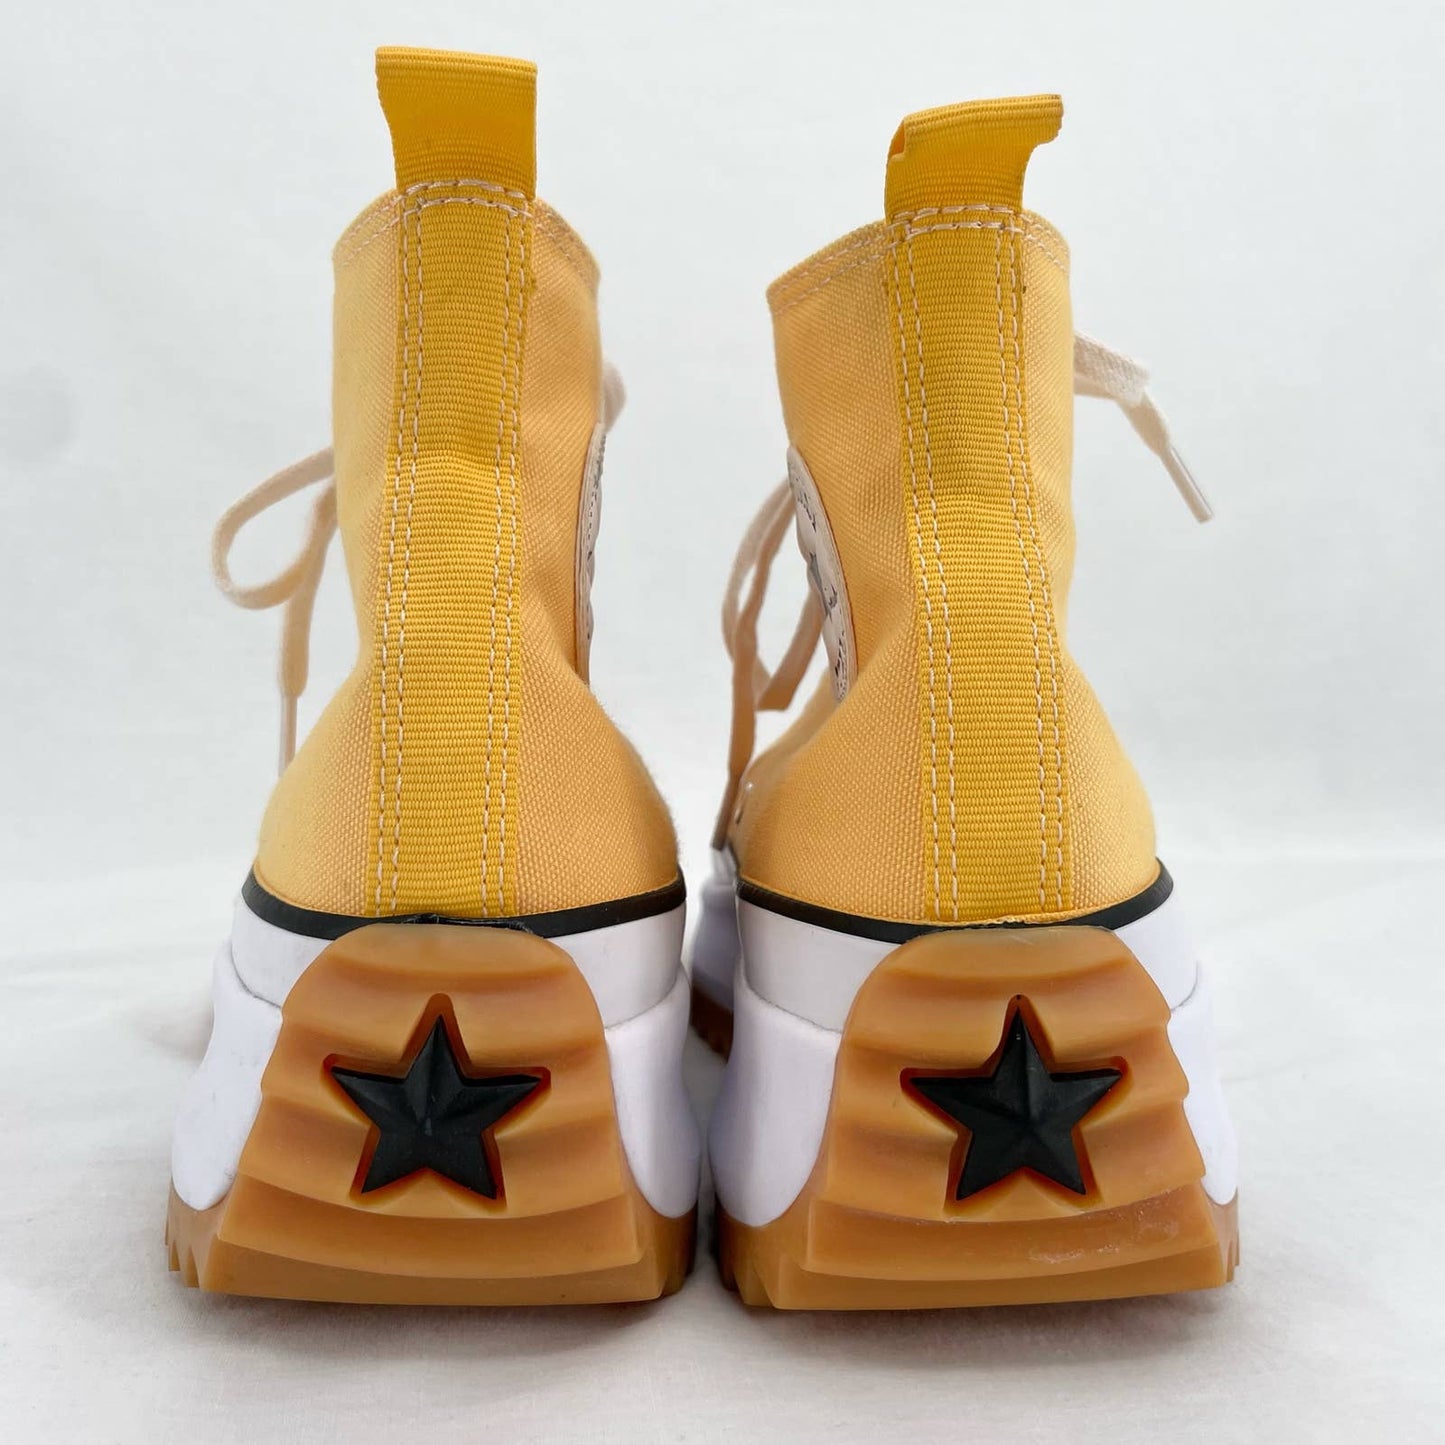 Converse Run Star Hike High Yellow Citron Zest Gum Platform Sneakers Shoes Size W 8.5